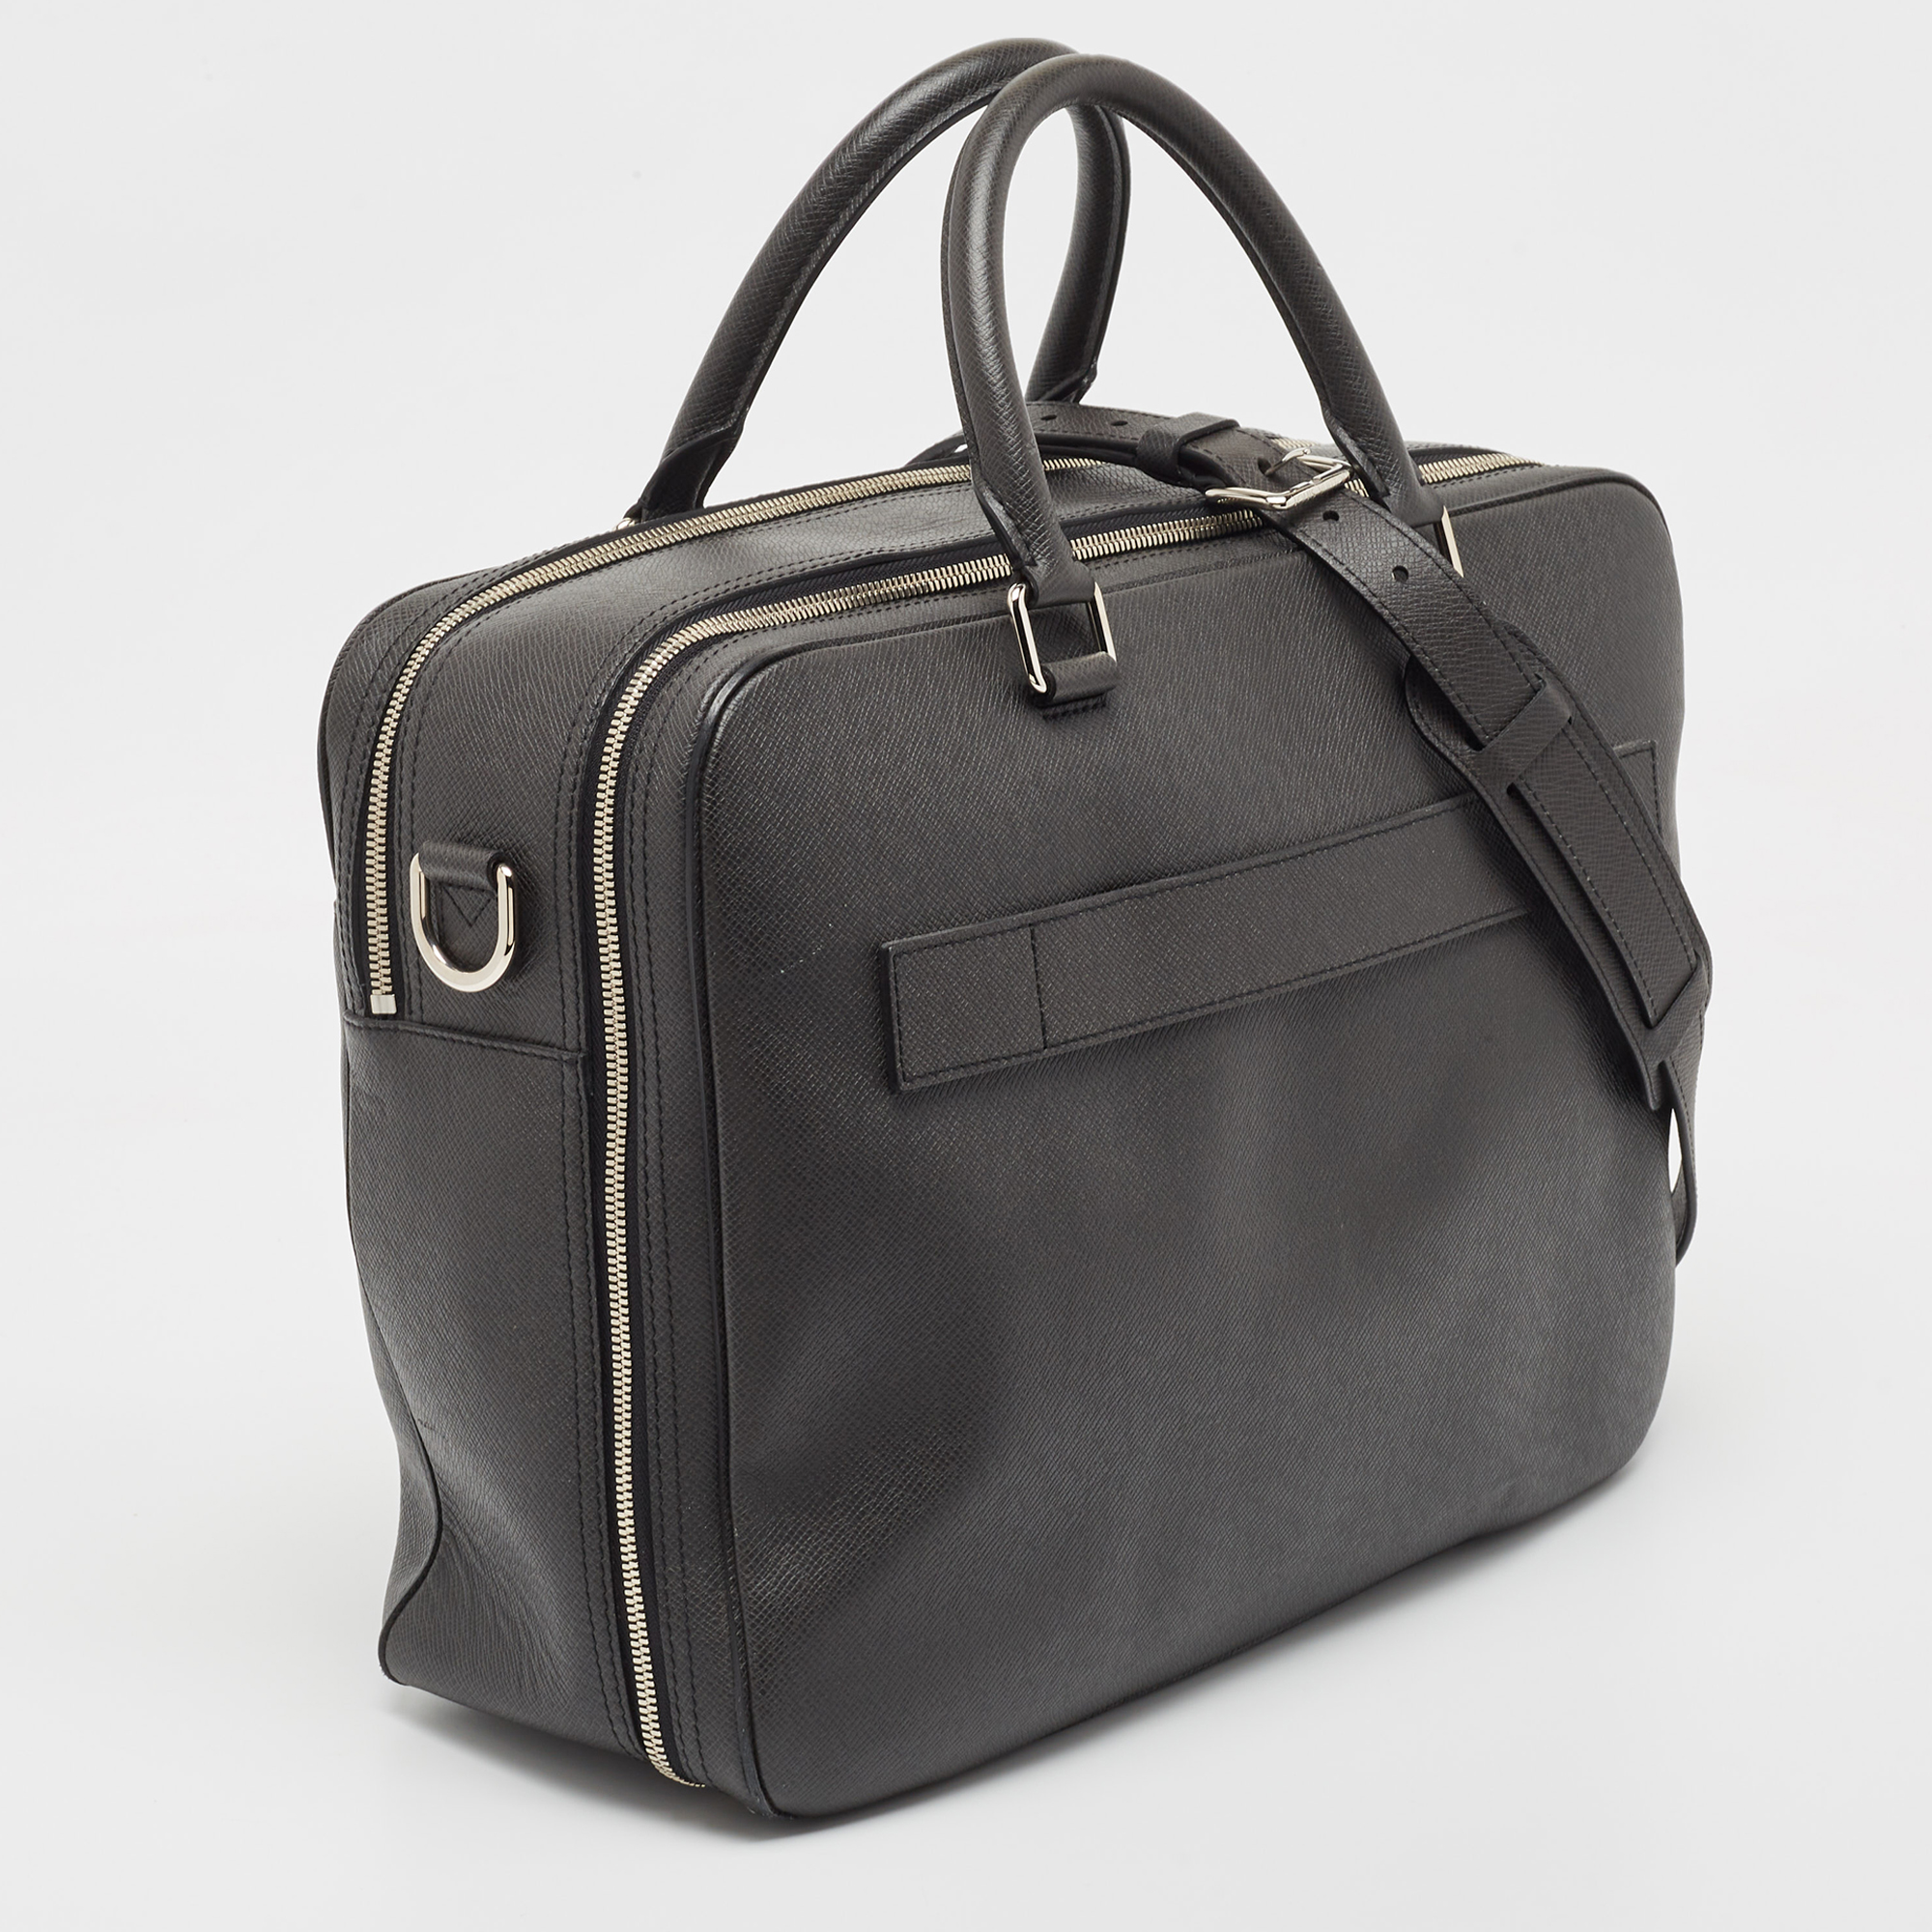 Louis Vuitton Black Taiga Leather Documents Briefcase Bag